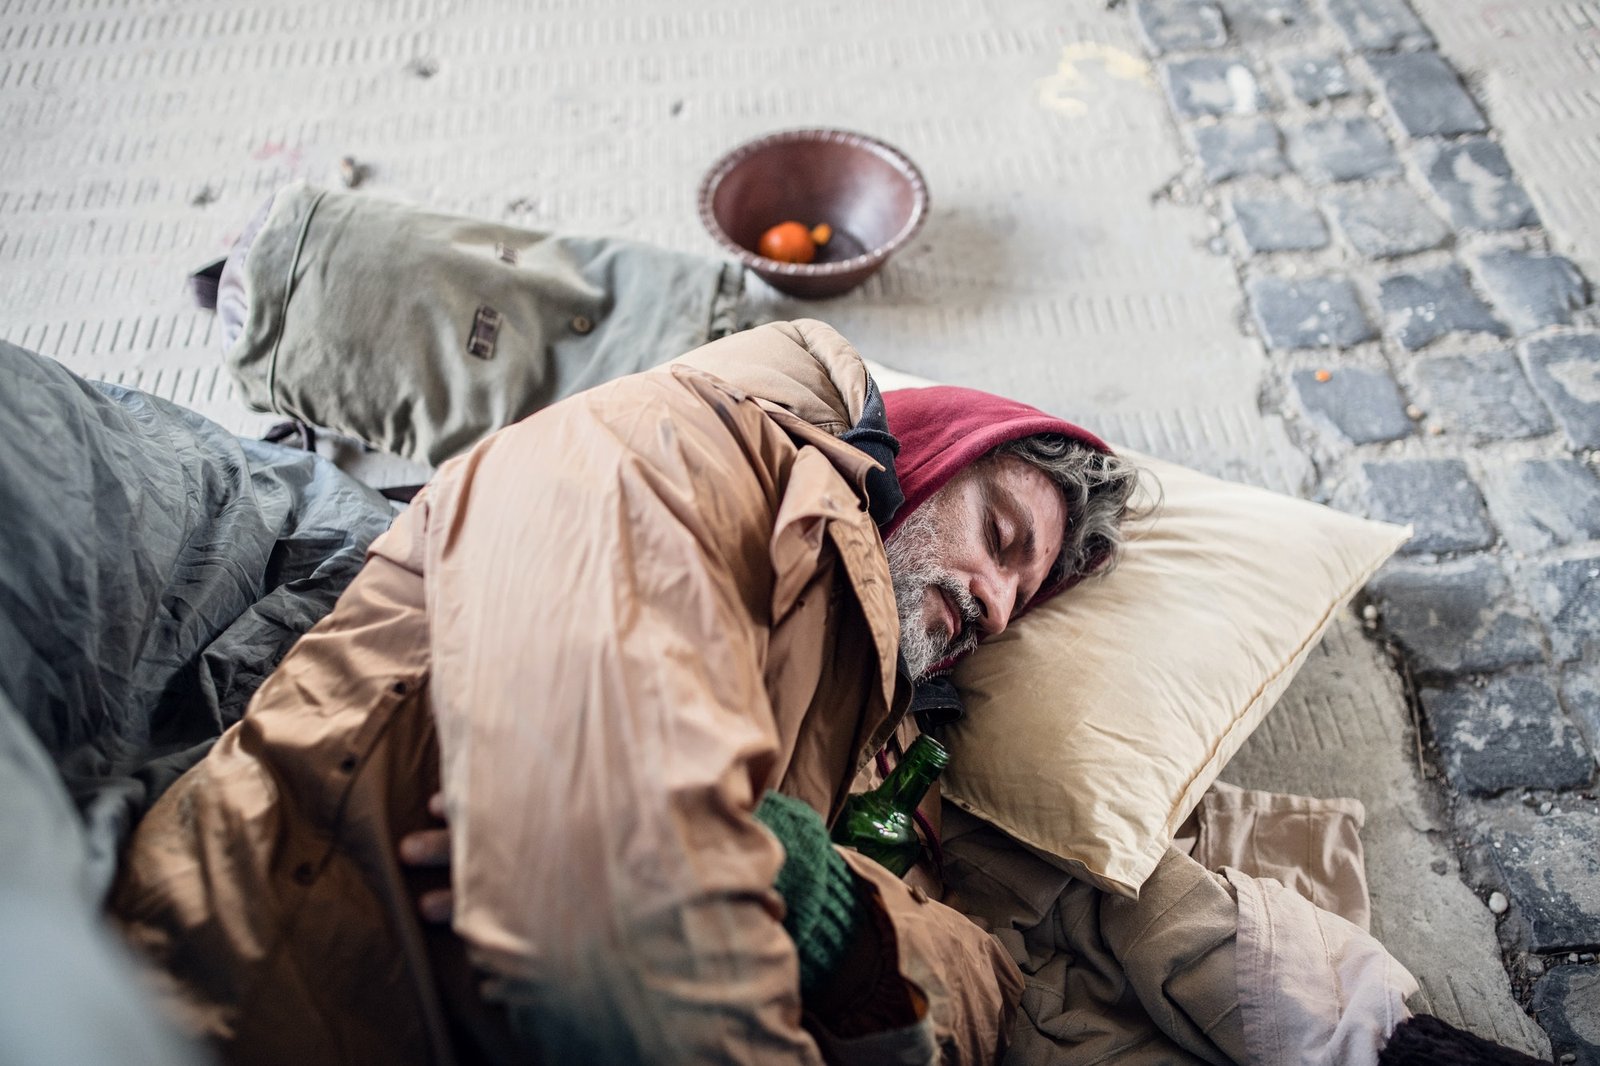 homeless-beggar-man-lying-on-the-ground-outdoors-in-city-sleeping-.jpg